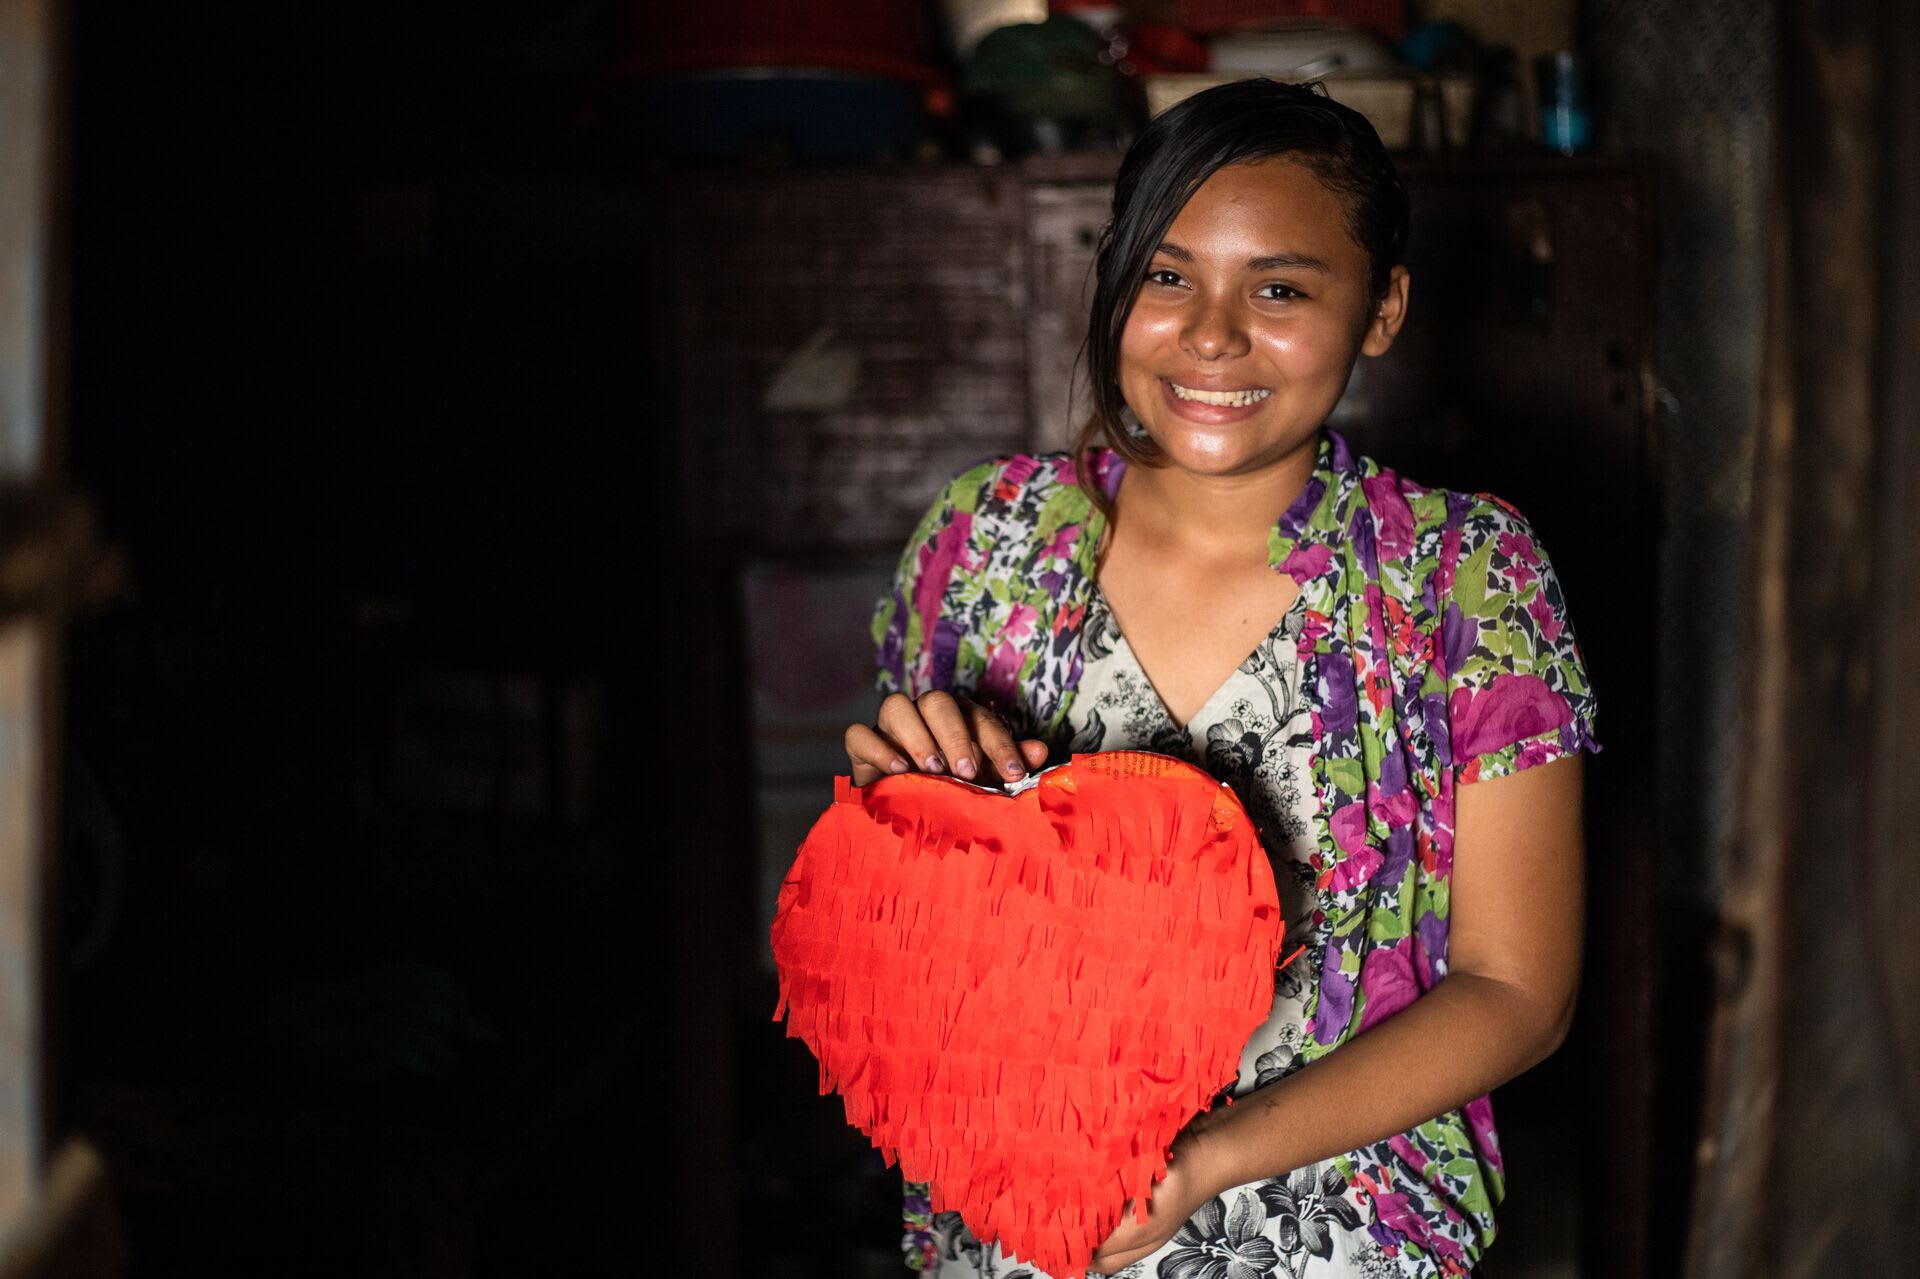 Estella poses with a heart pinata she made